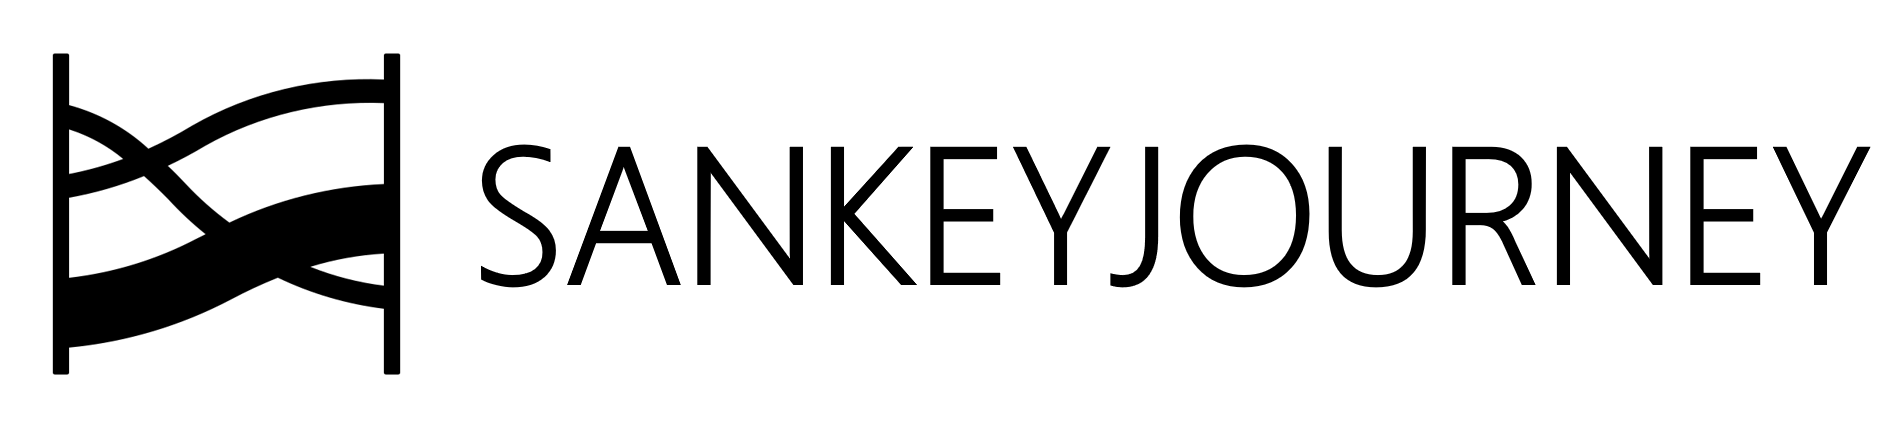 SankeyJourney logo - a Sankey Diagram Generator tool to analyse Customer Journey